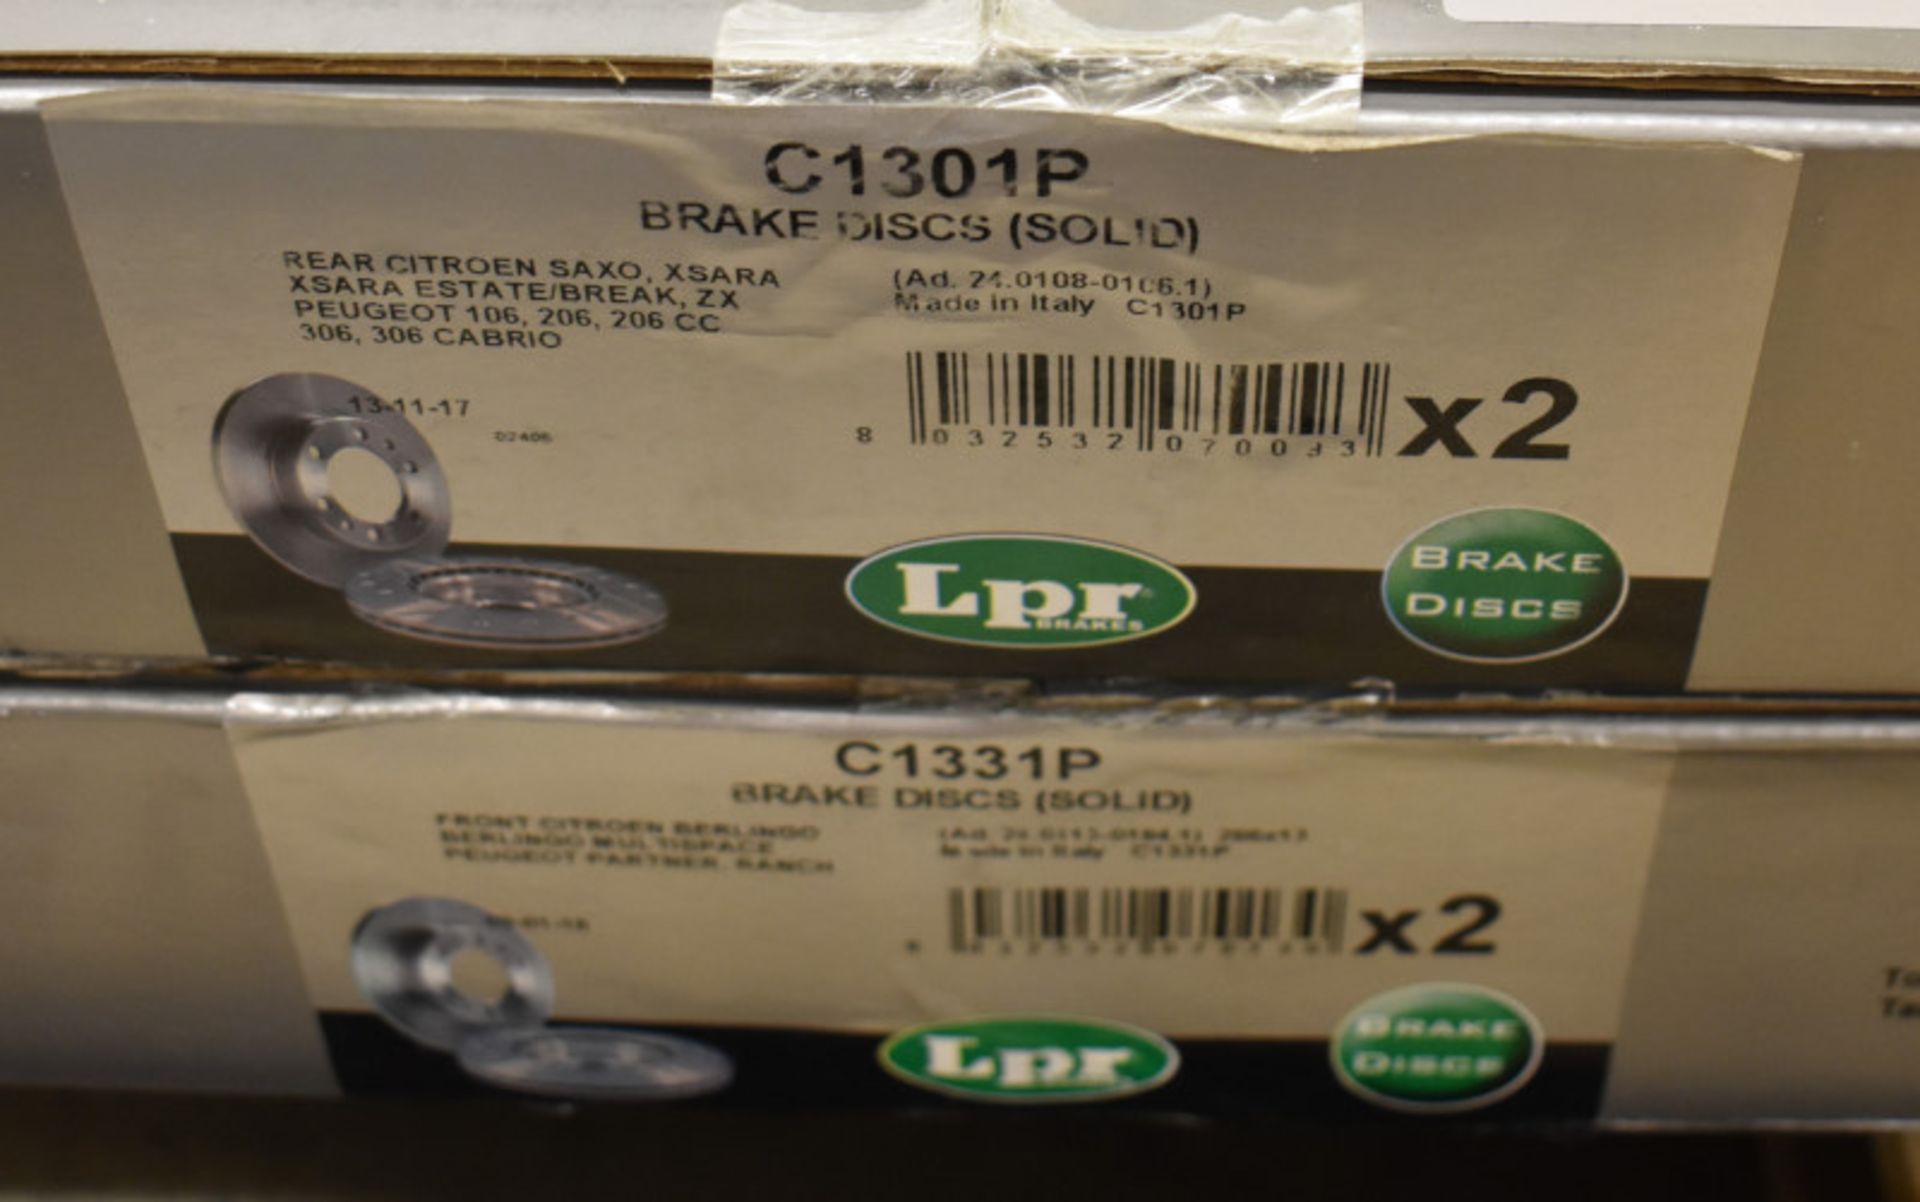 2x LPR Brake Disc Sets - models - C1301P & C1331P - Image 2 of 2